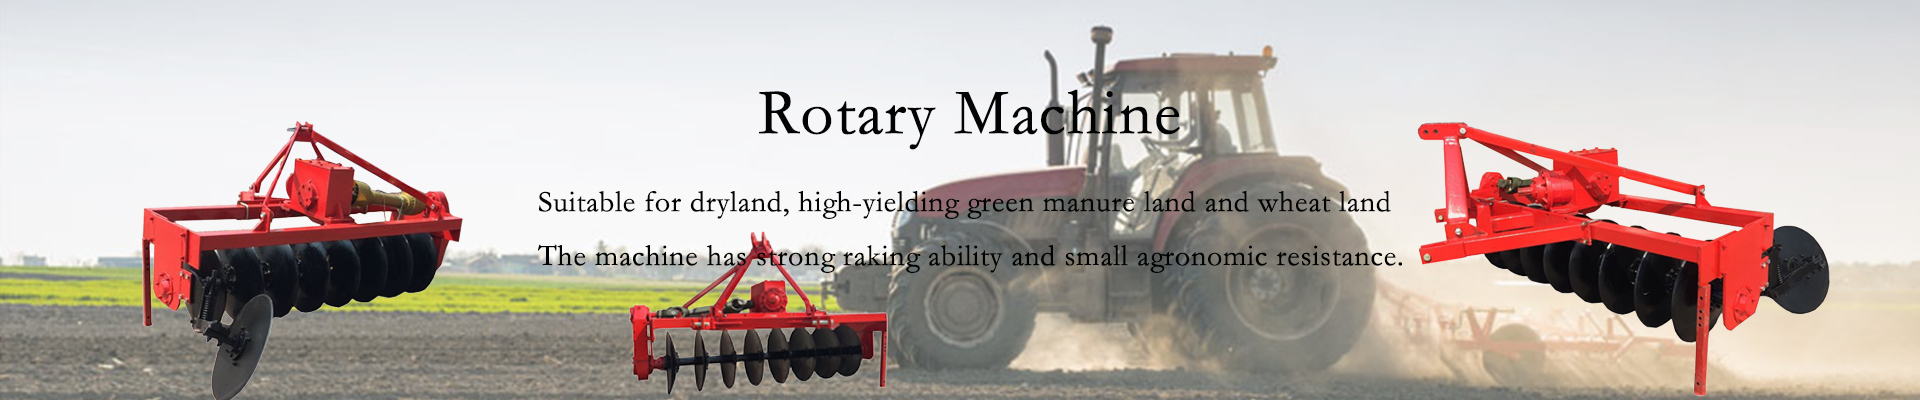 Rotary tillage machinery